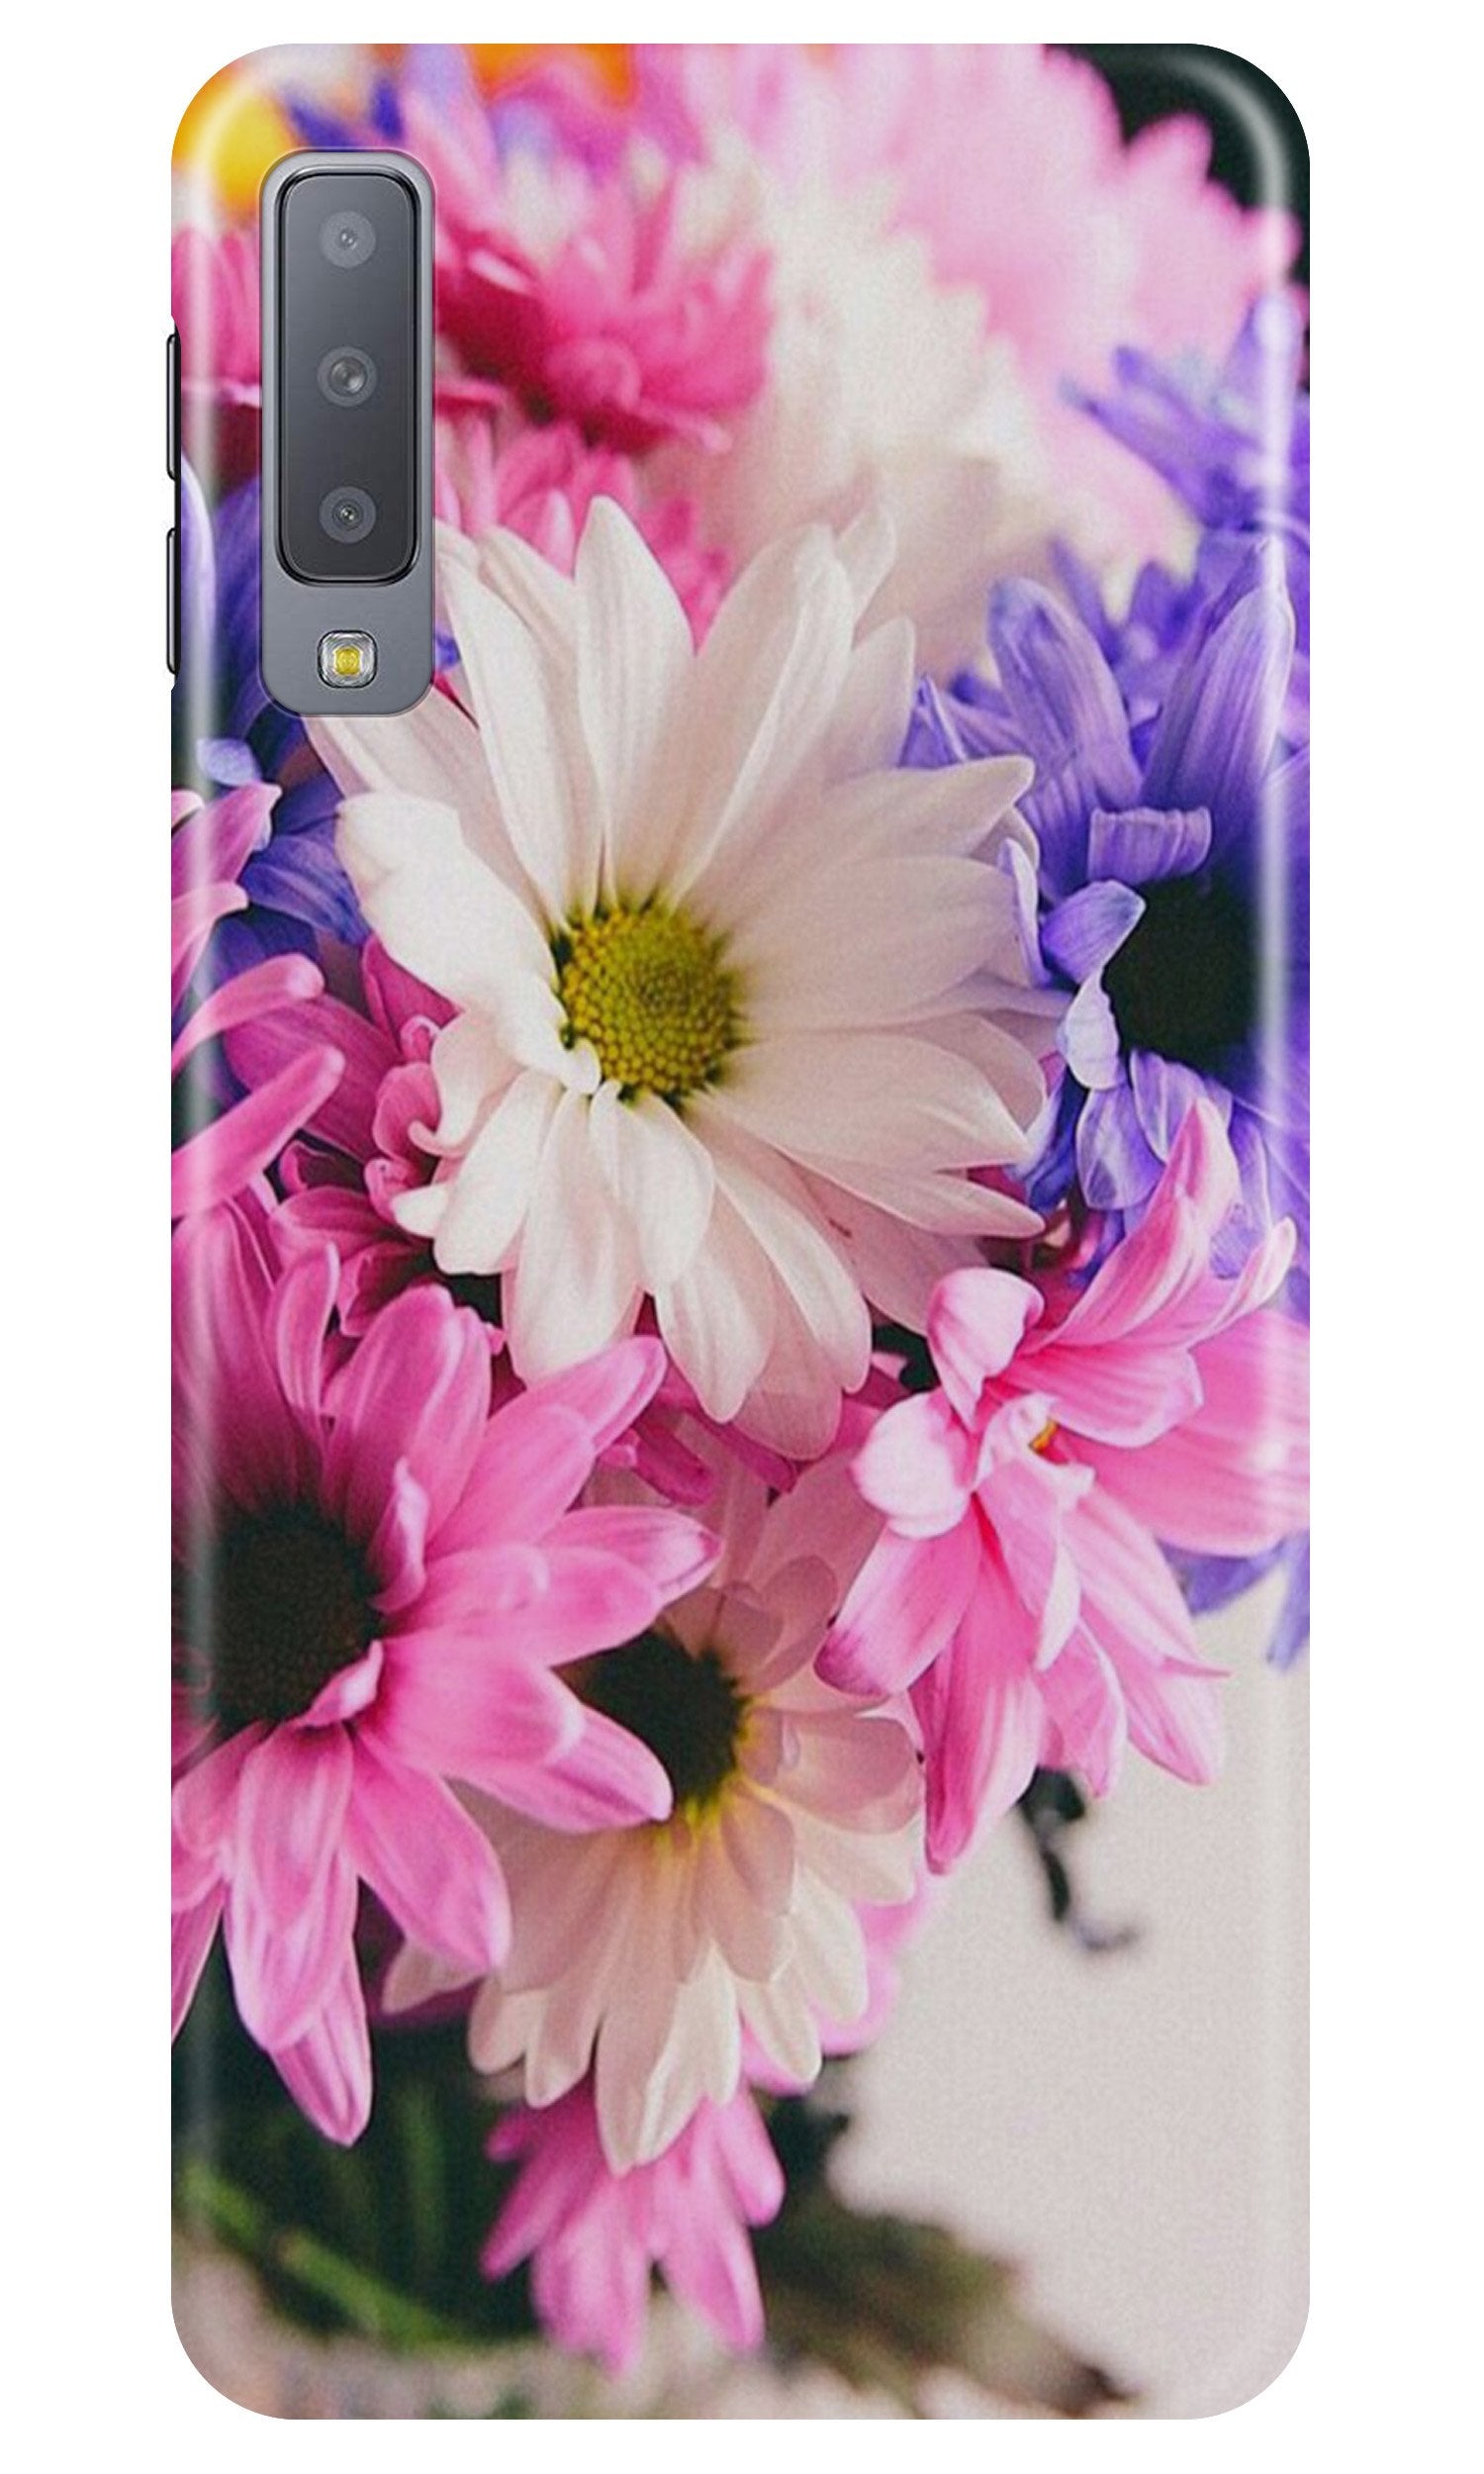 Coloful Daisy Case for Samsung Galaxy A70